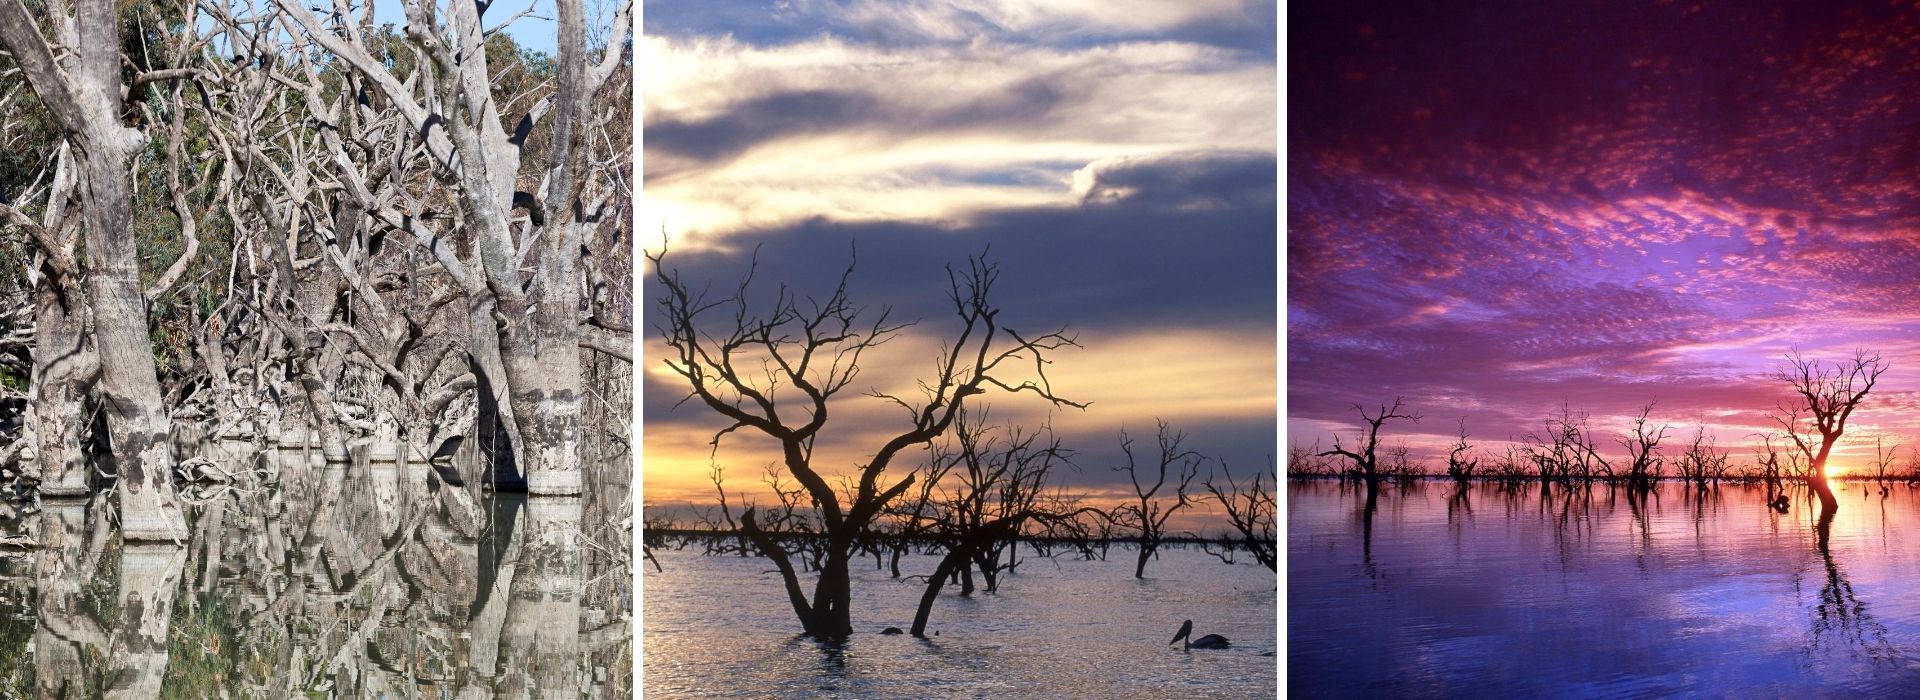 Menindee Lakes Outback NSW